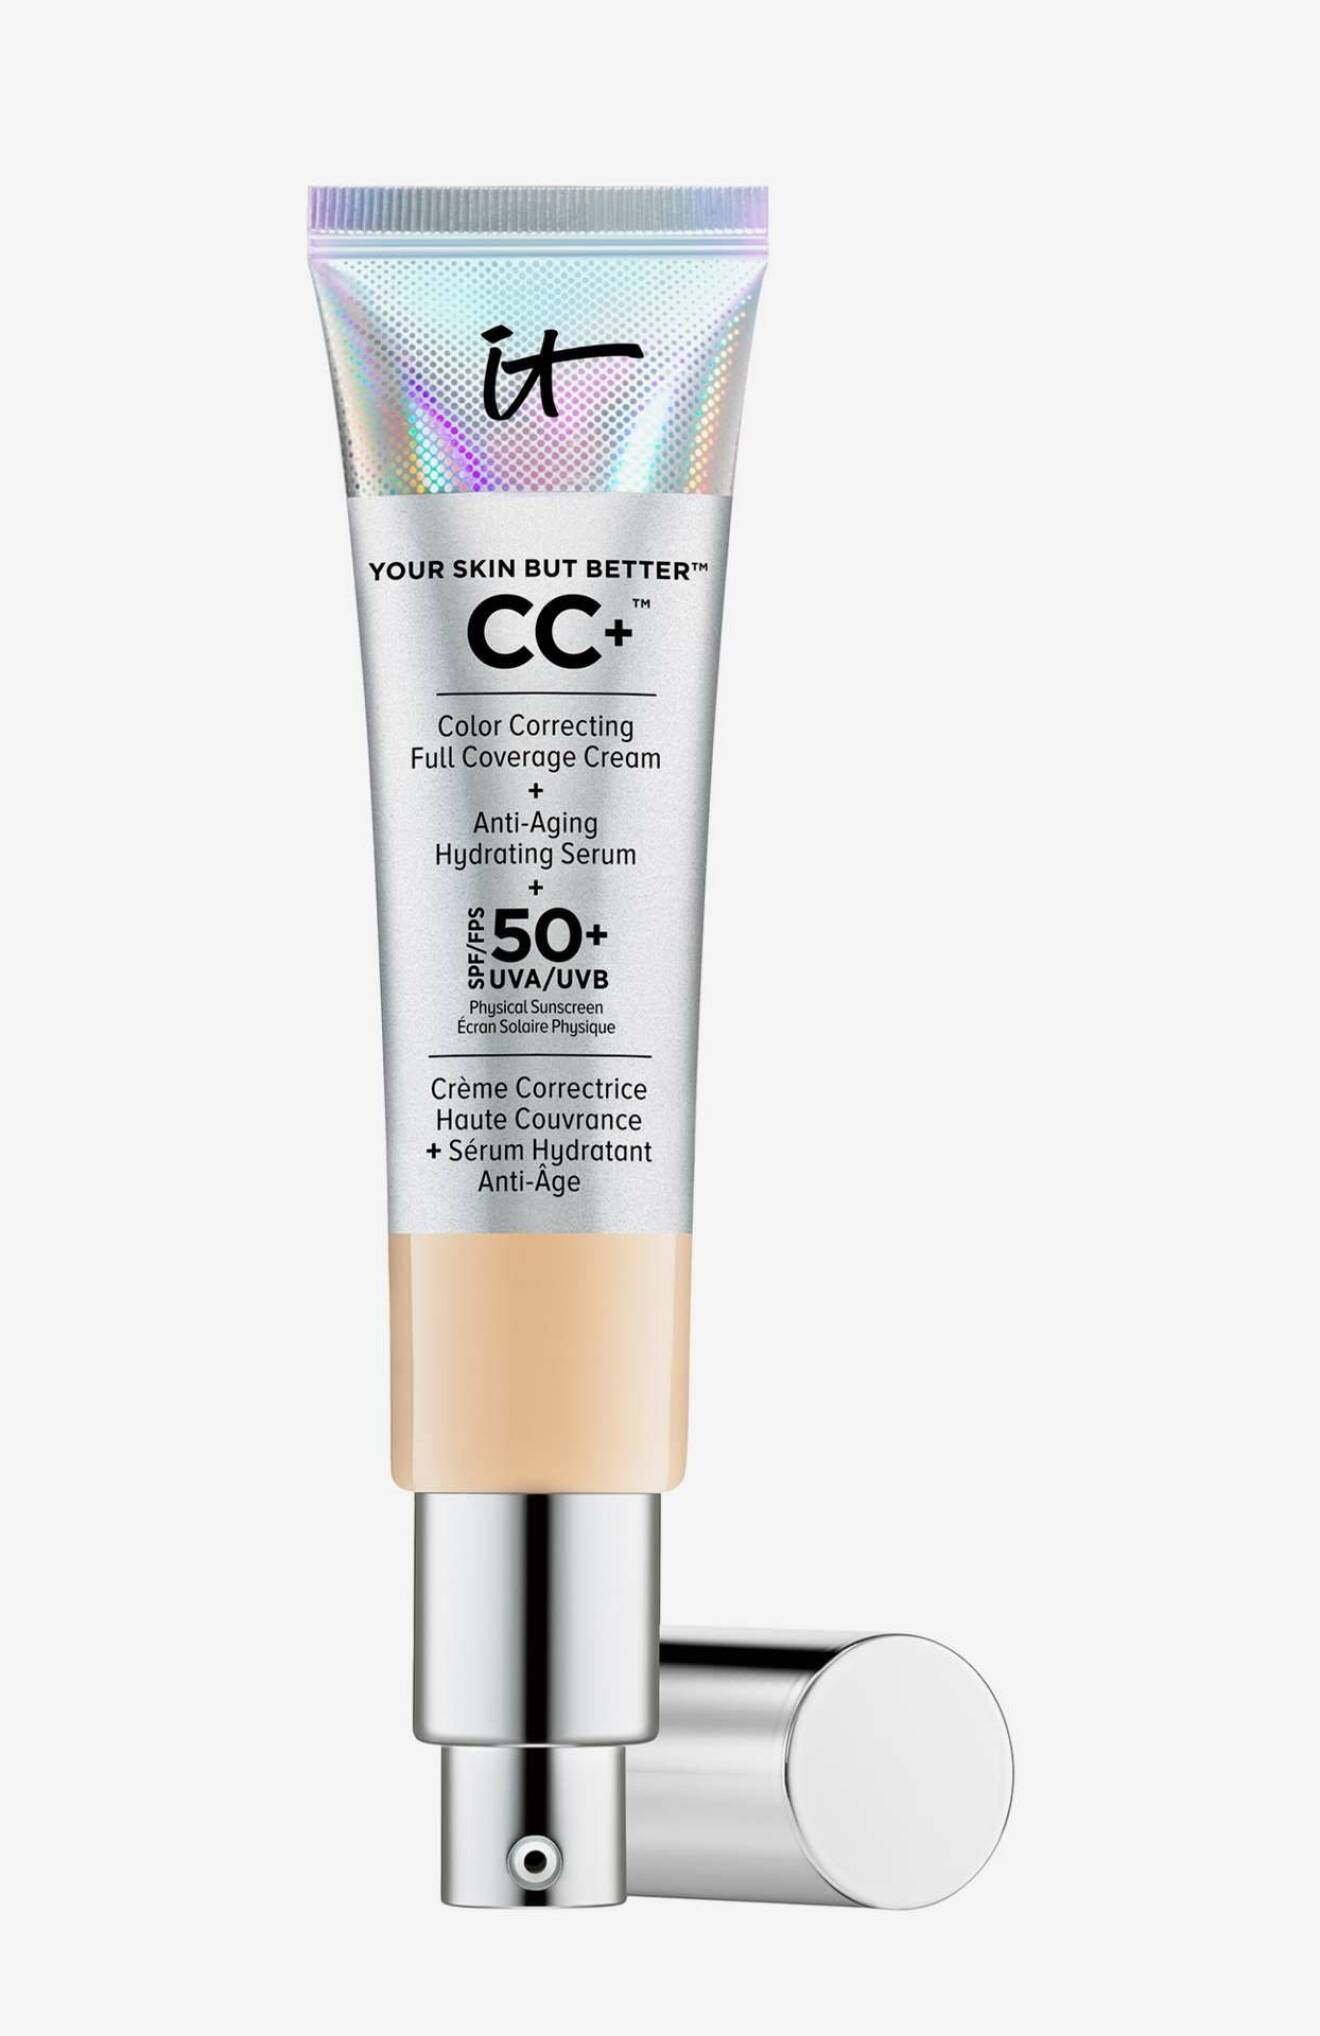 Your skin but better CC+ cream SPF 50+ från It Cosmetics.